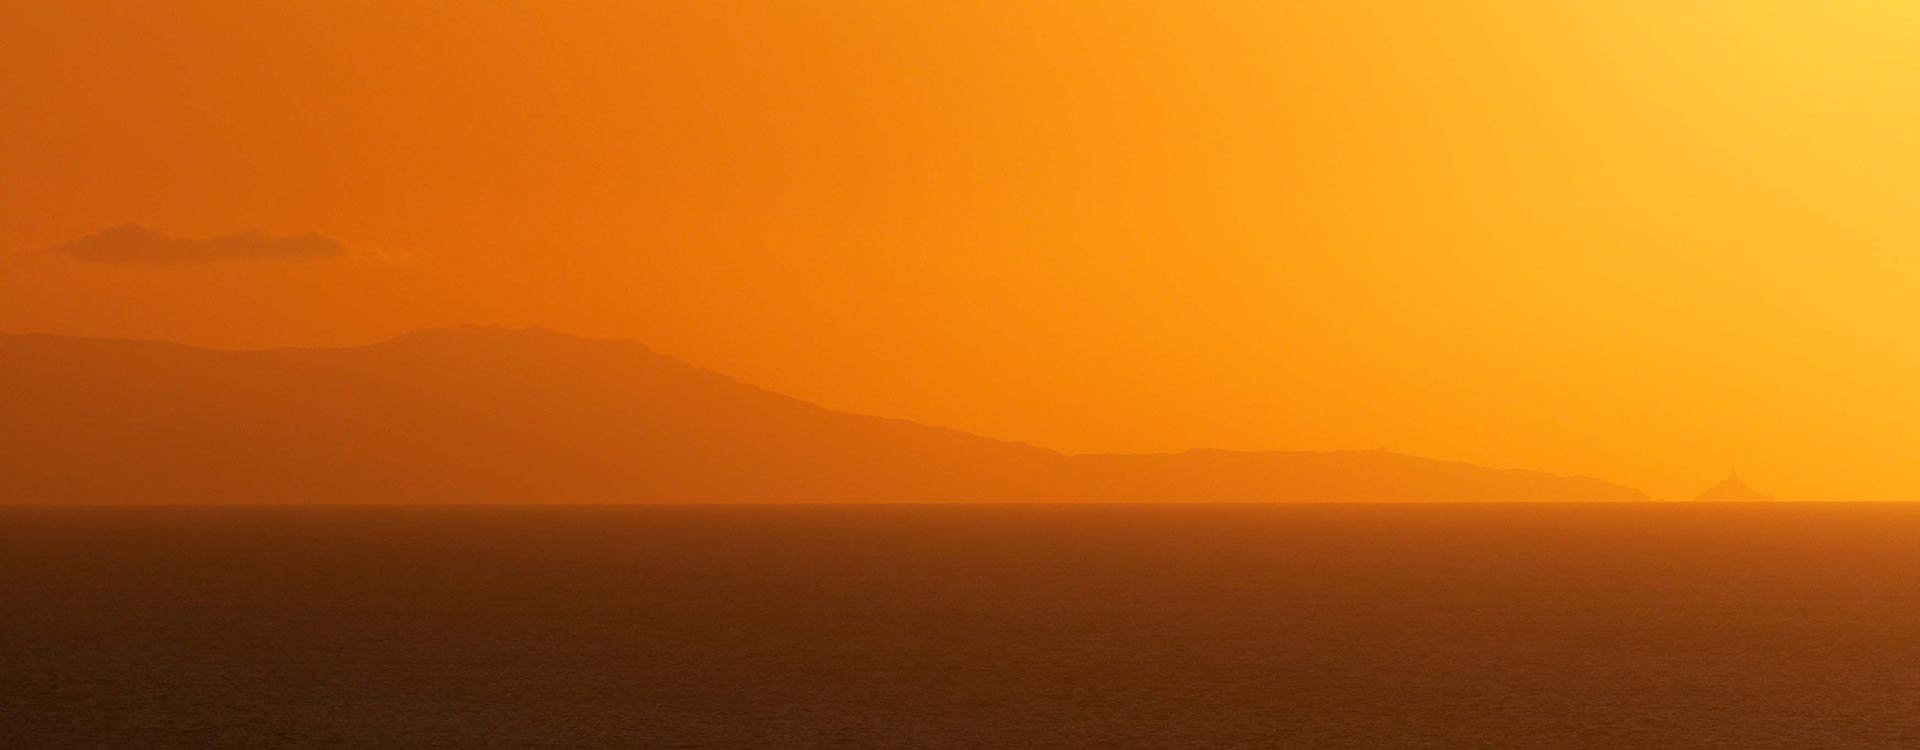 L'Asinara al tramonto